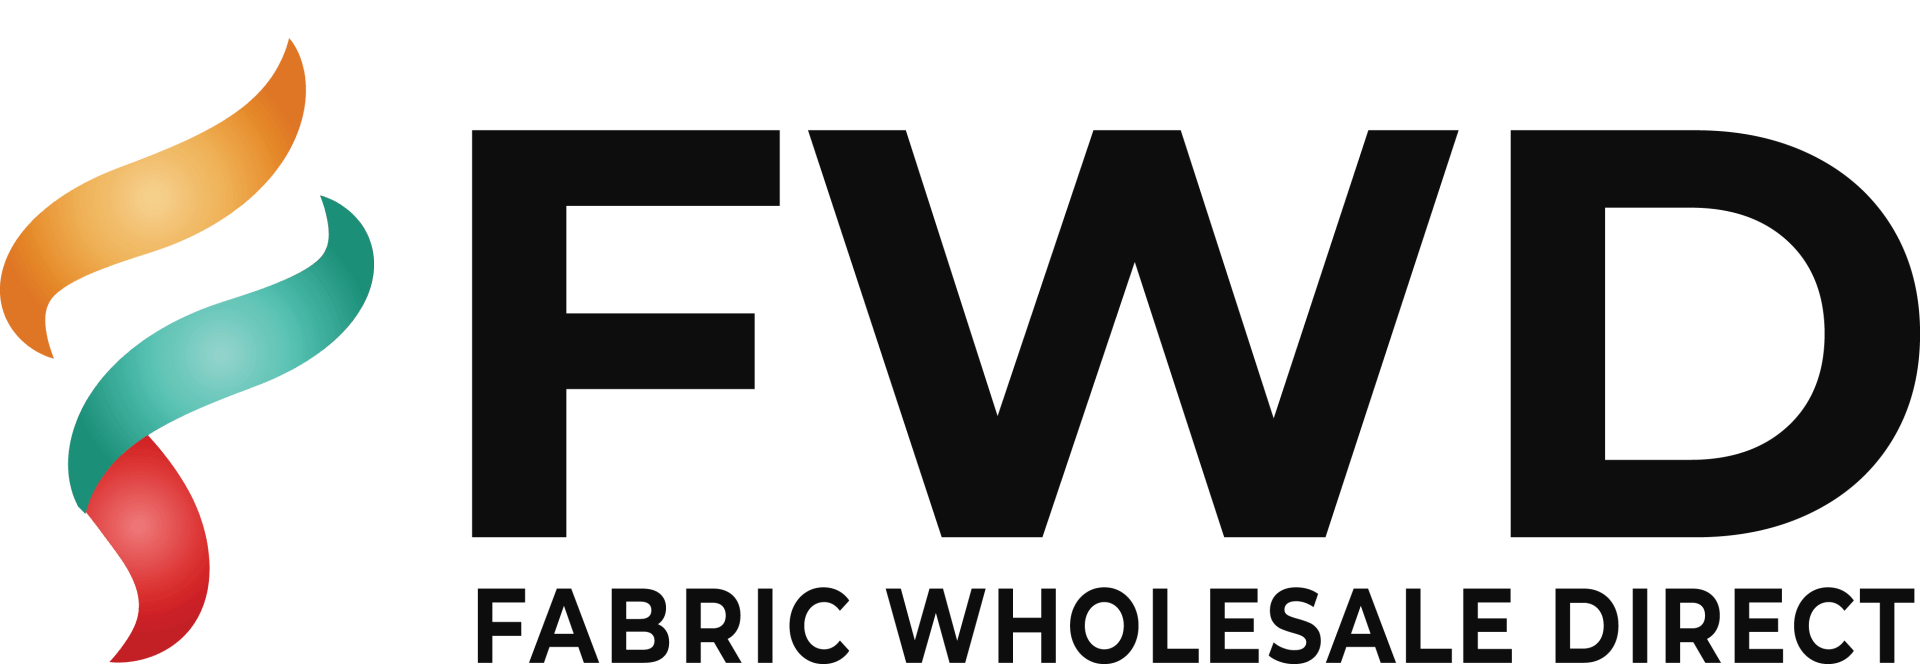 Fabric Wholesale Direct